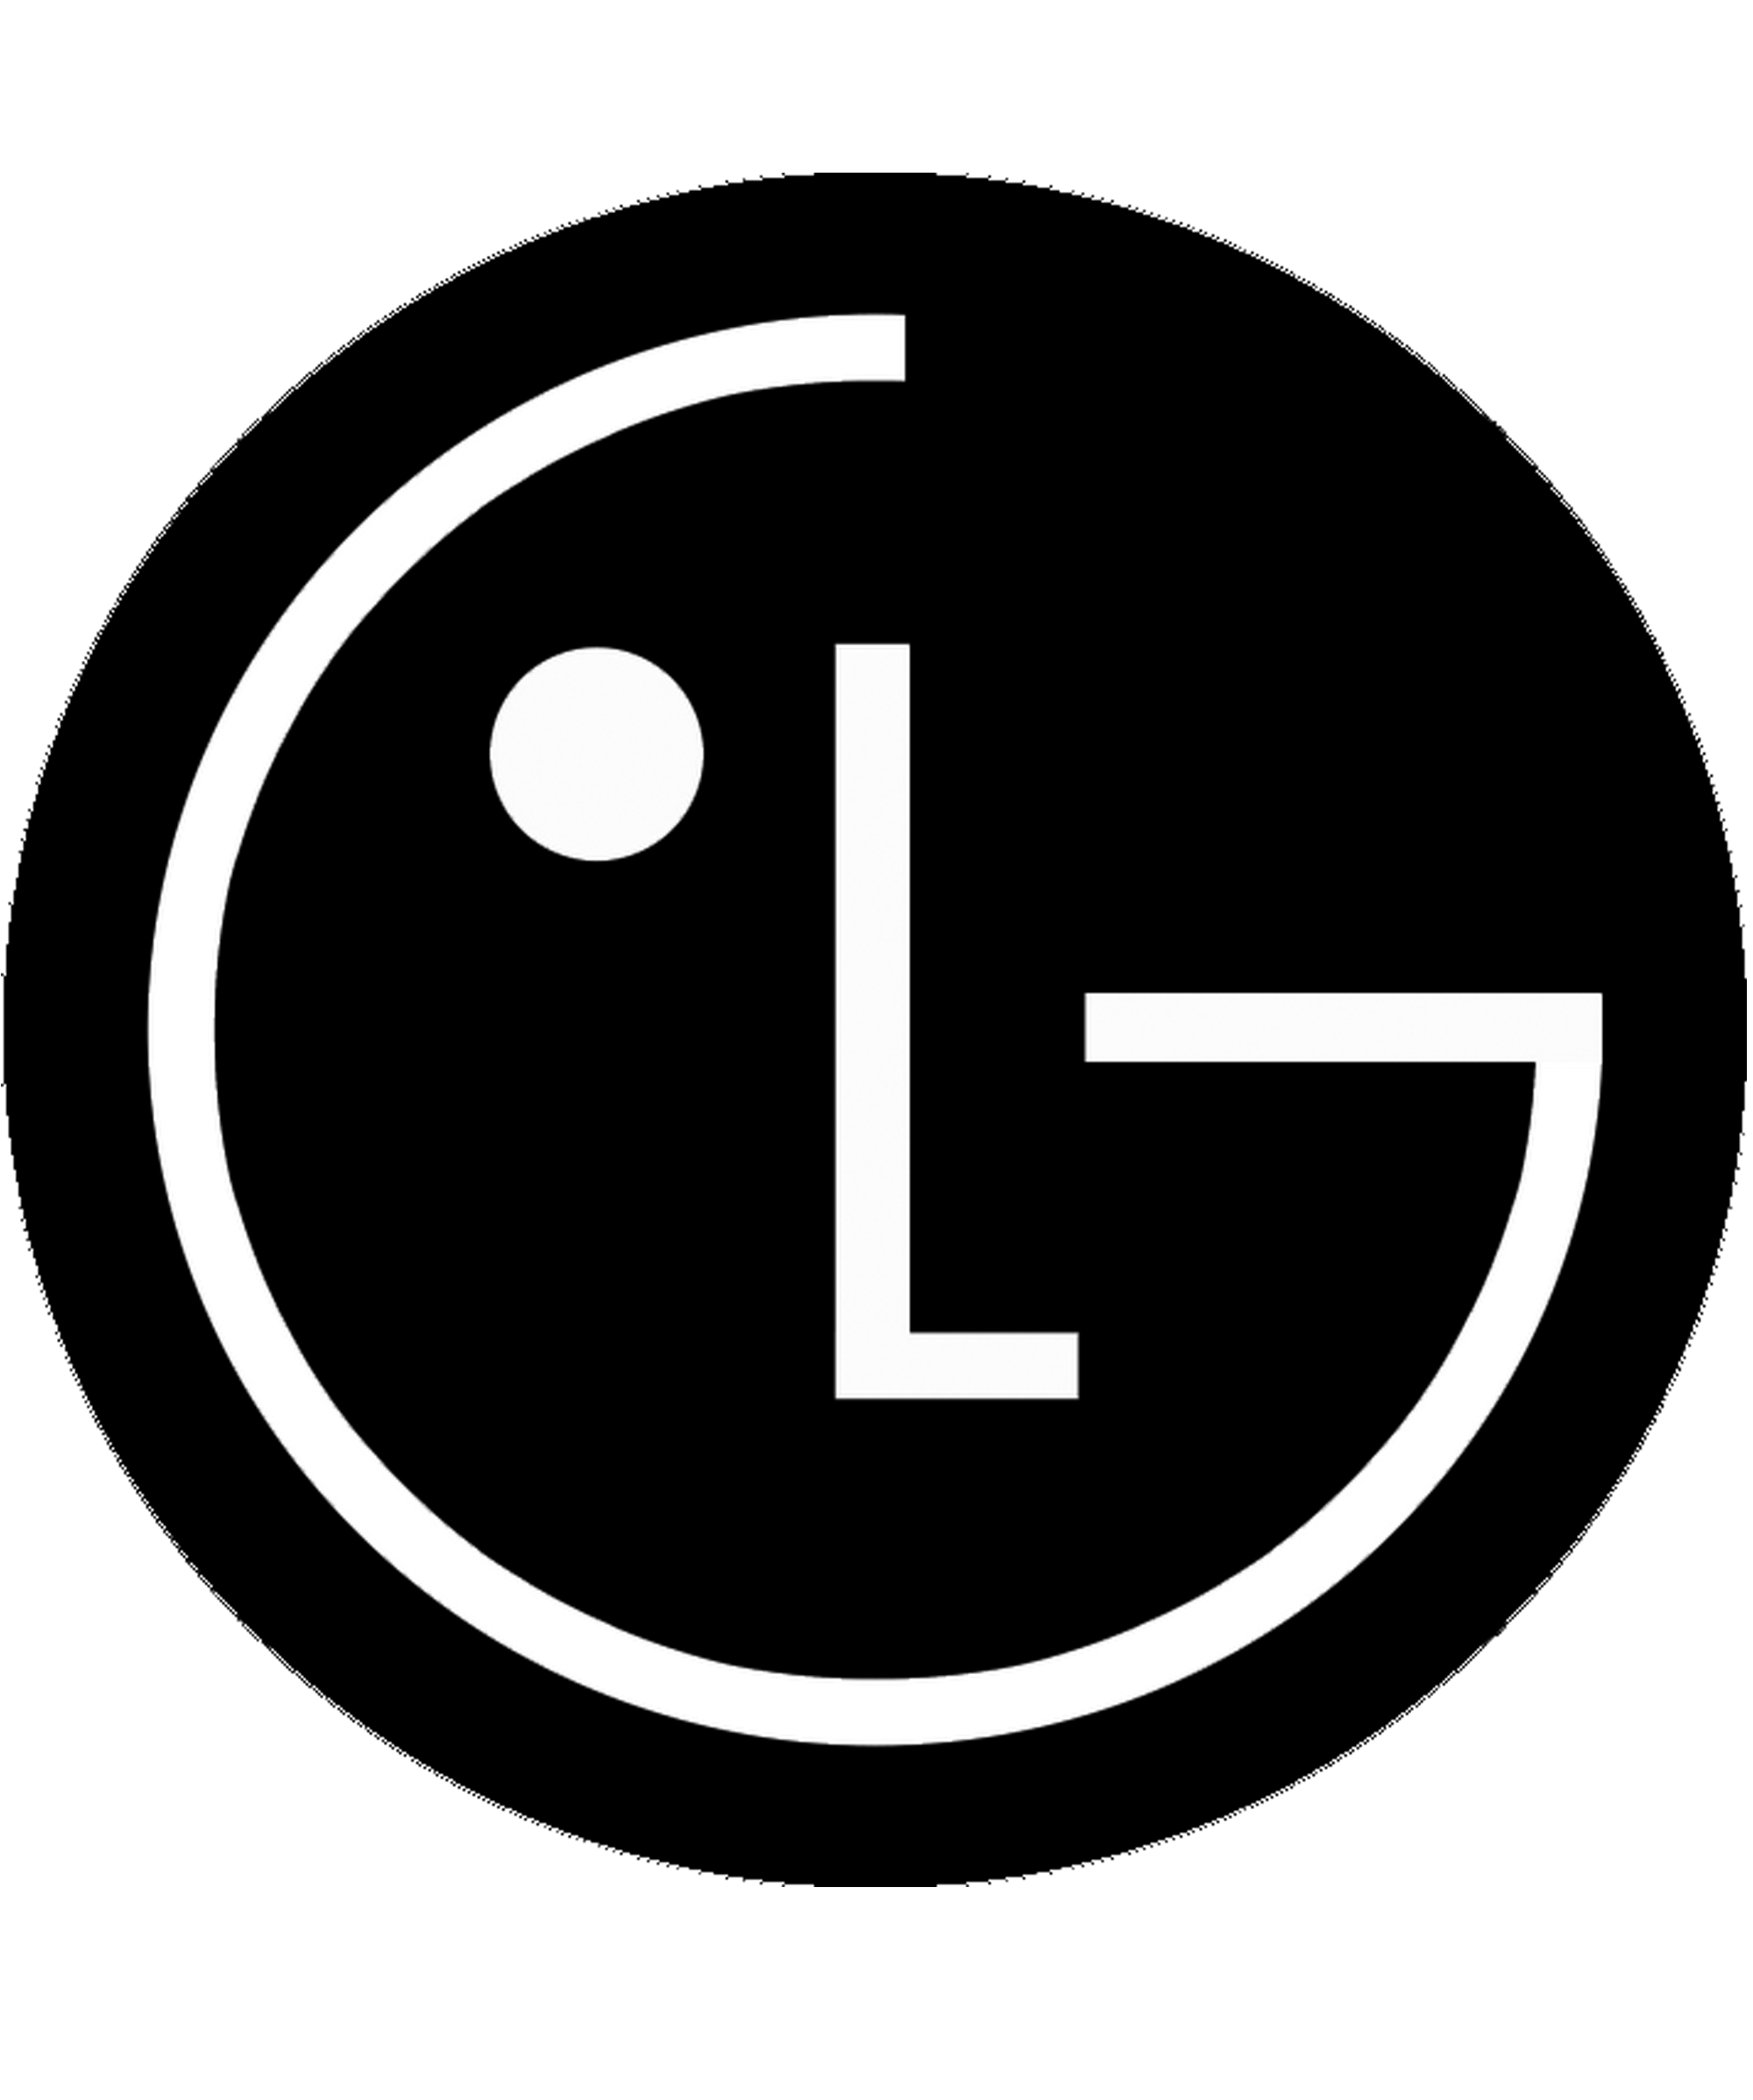 LG PNG Transparent Image